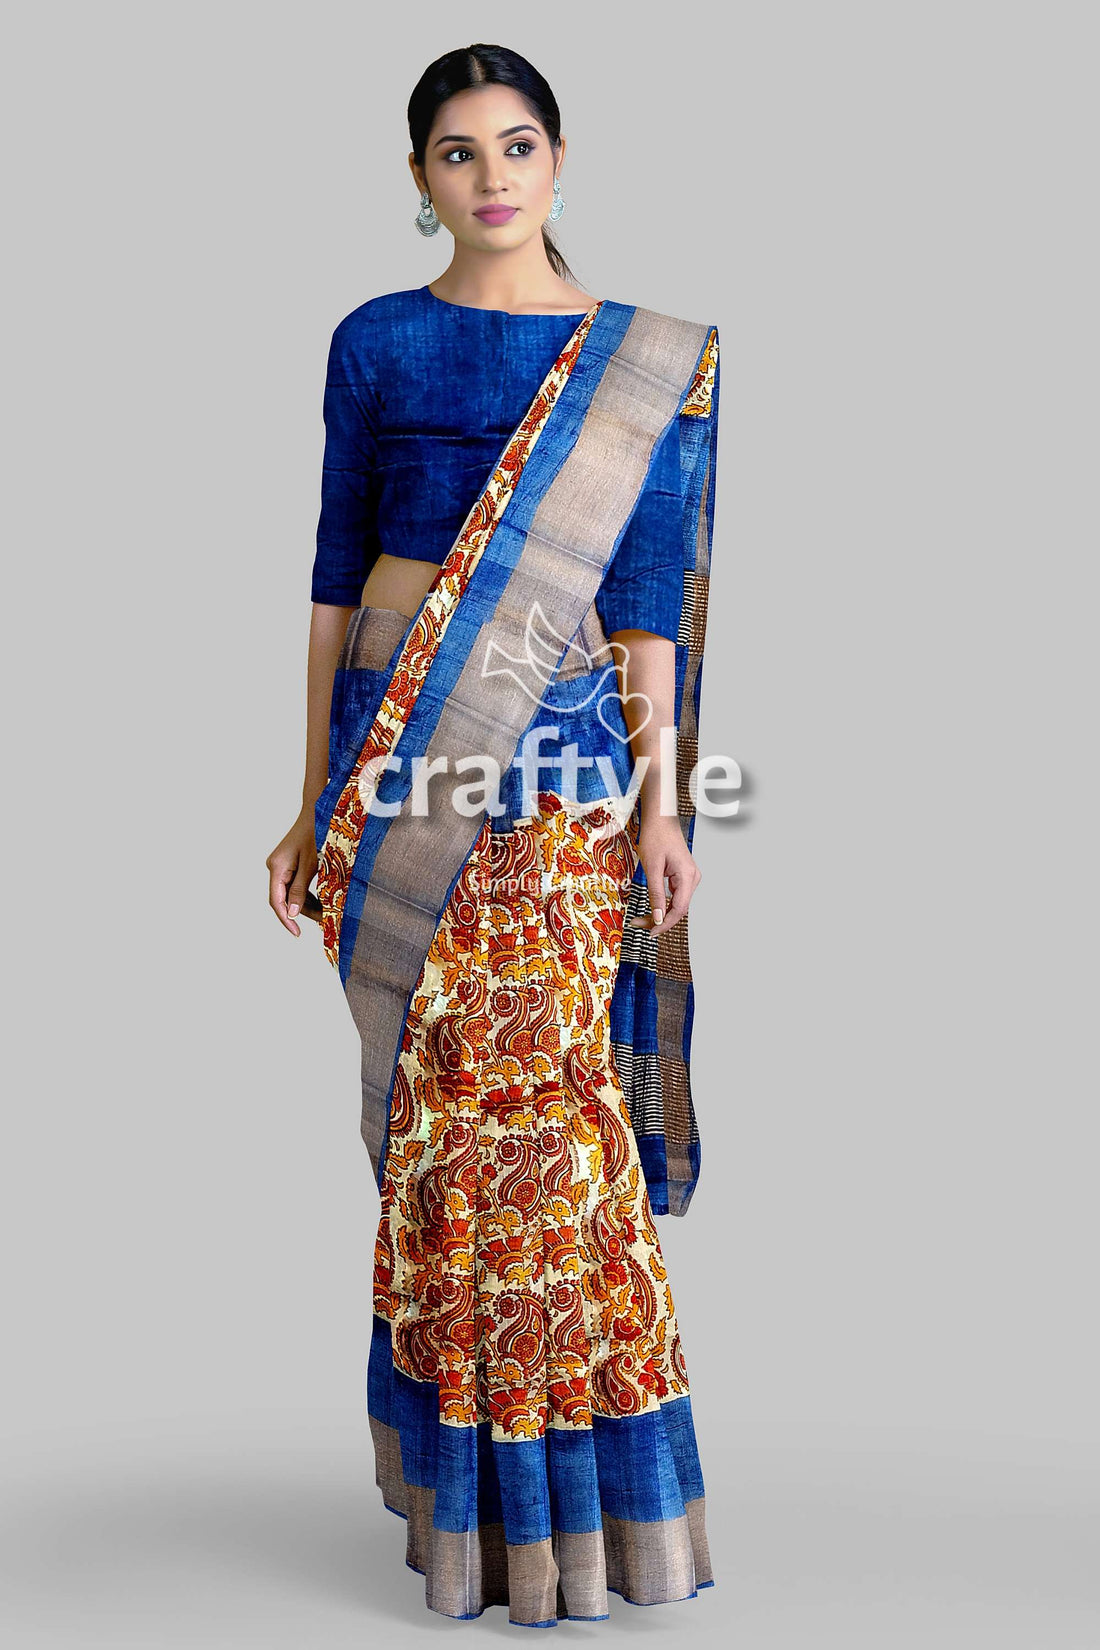 Sand Brown Hand Block Print Pure Tussar Silk Saree with Zari Border - Craftyle